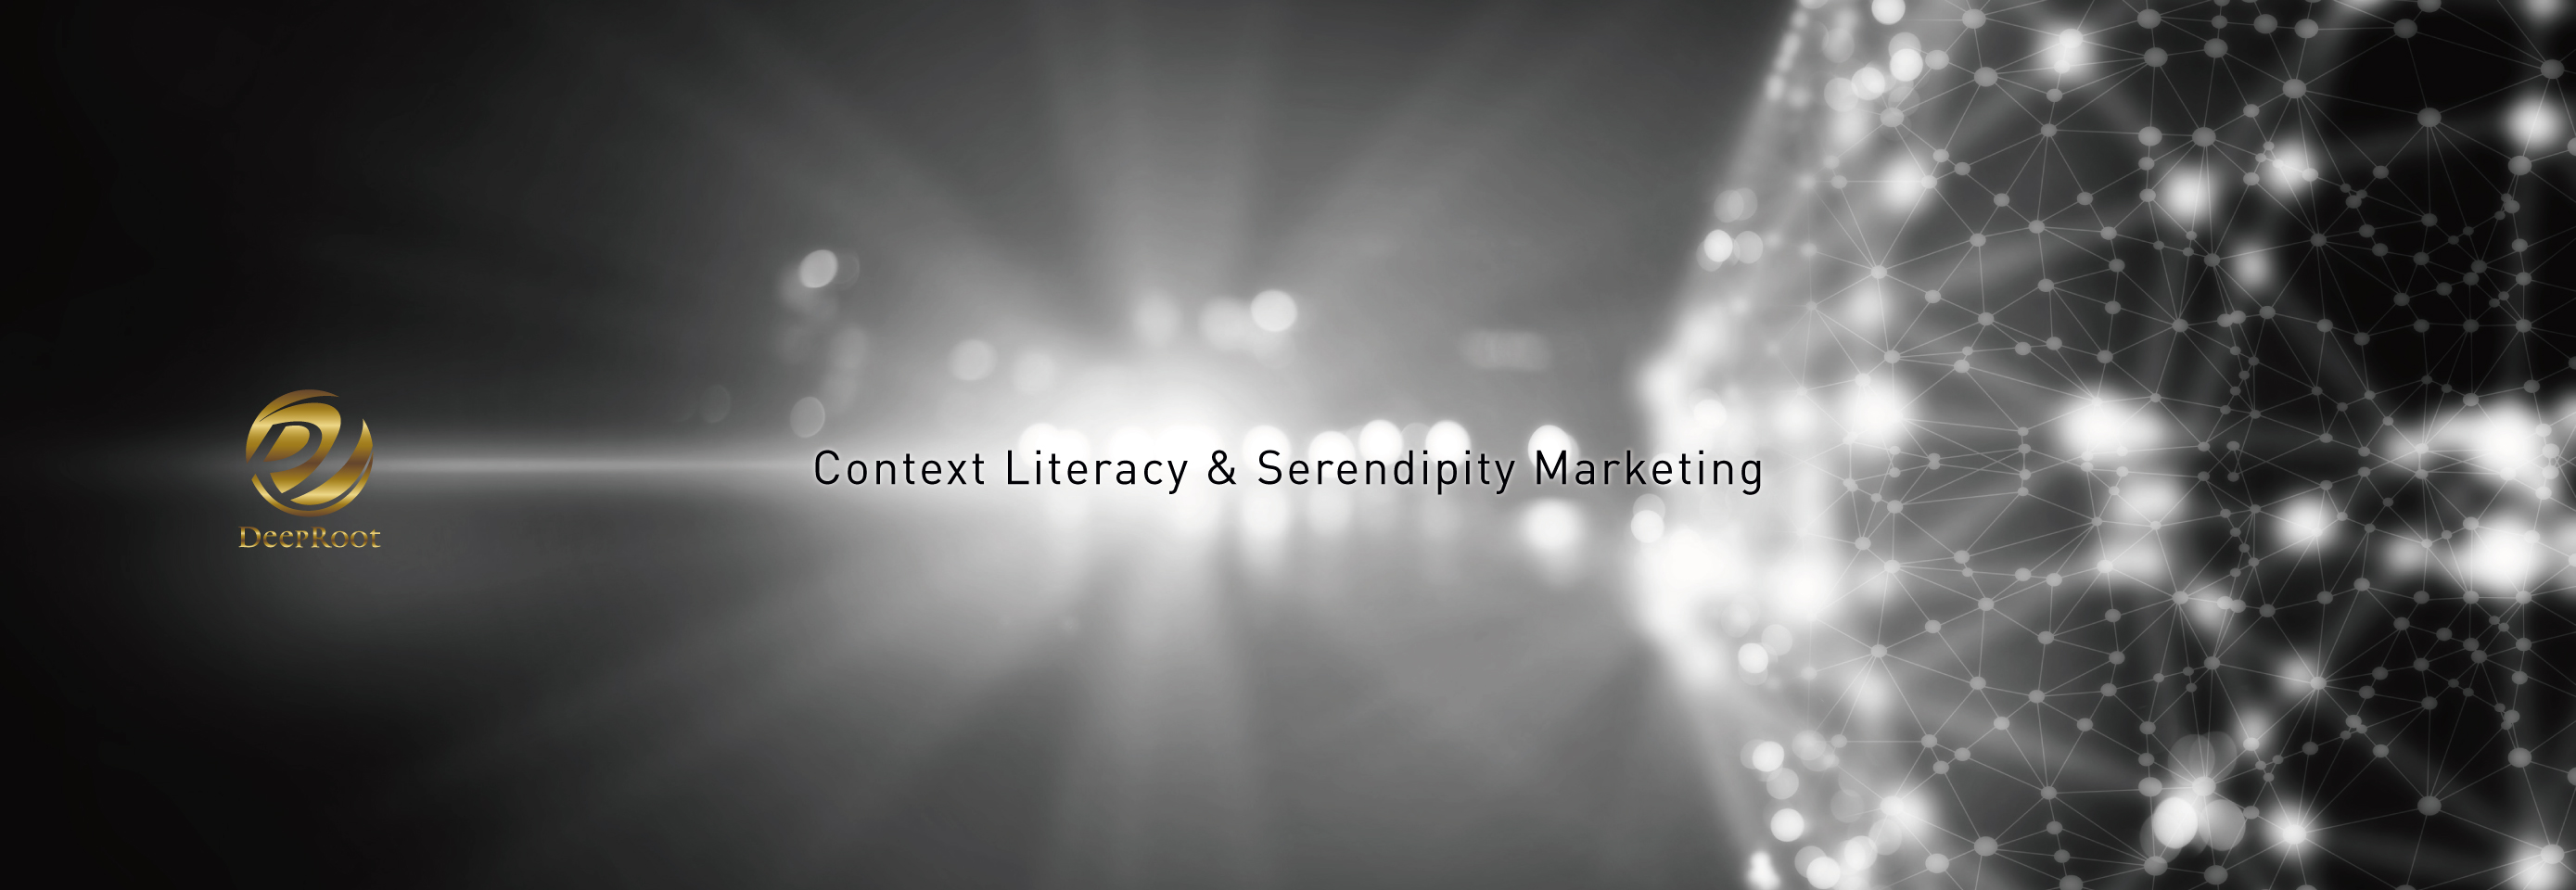 Context Literacy & Serendipity Marketing